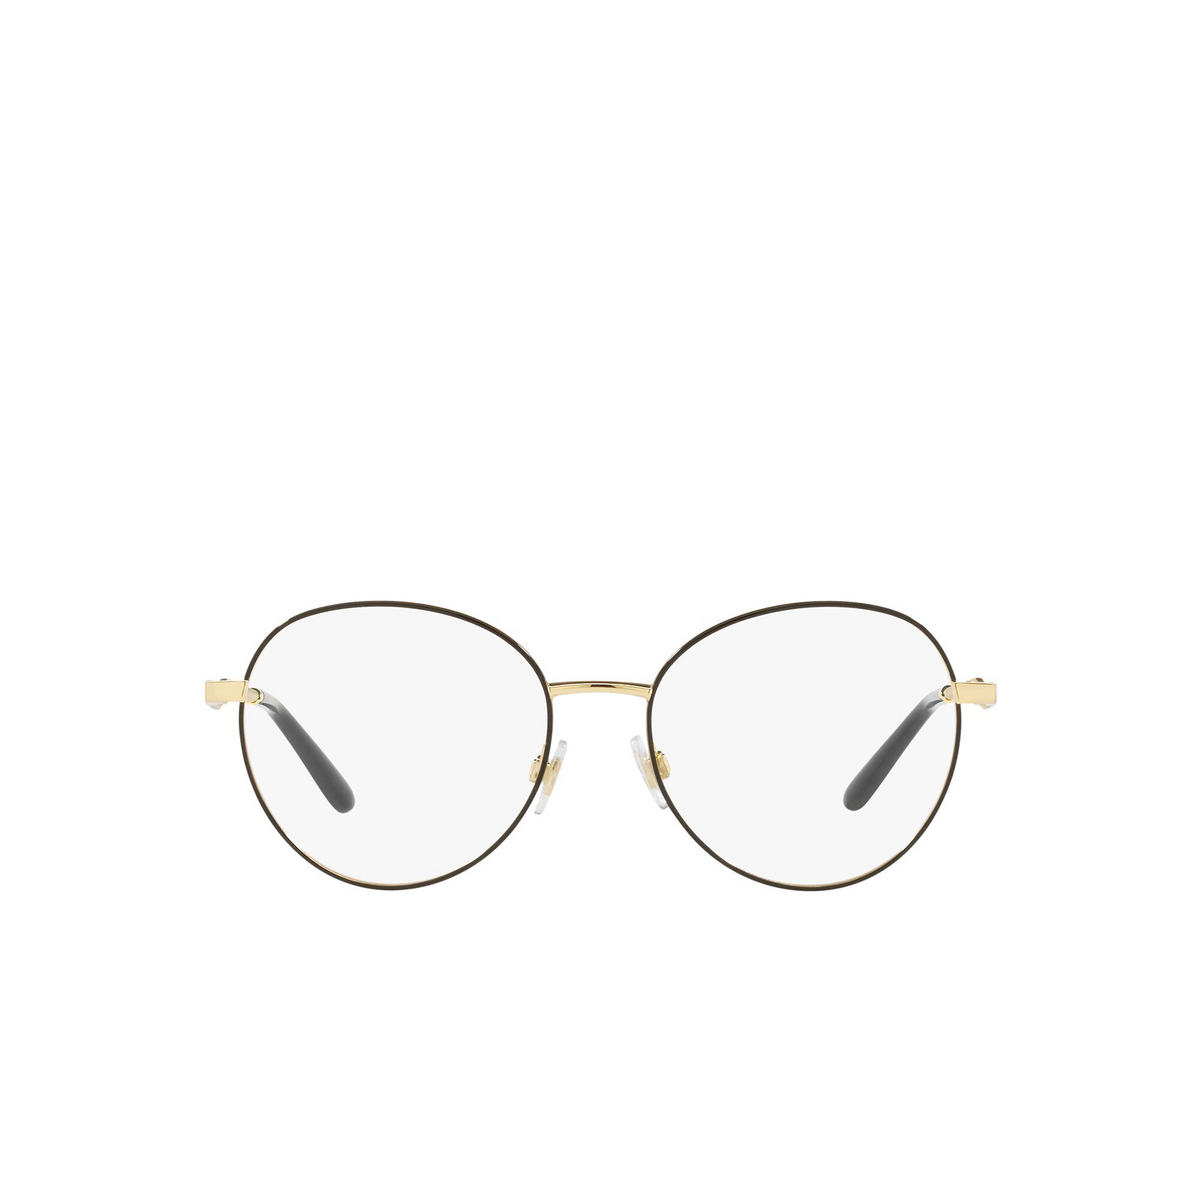 Dolce & Gabbana DG1333 Eyeglasses 1334 Gold / Black - front view